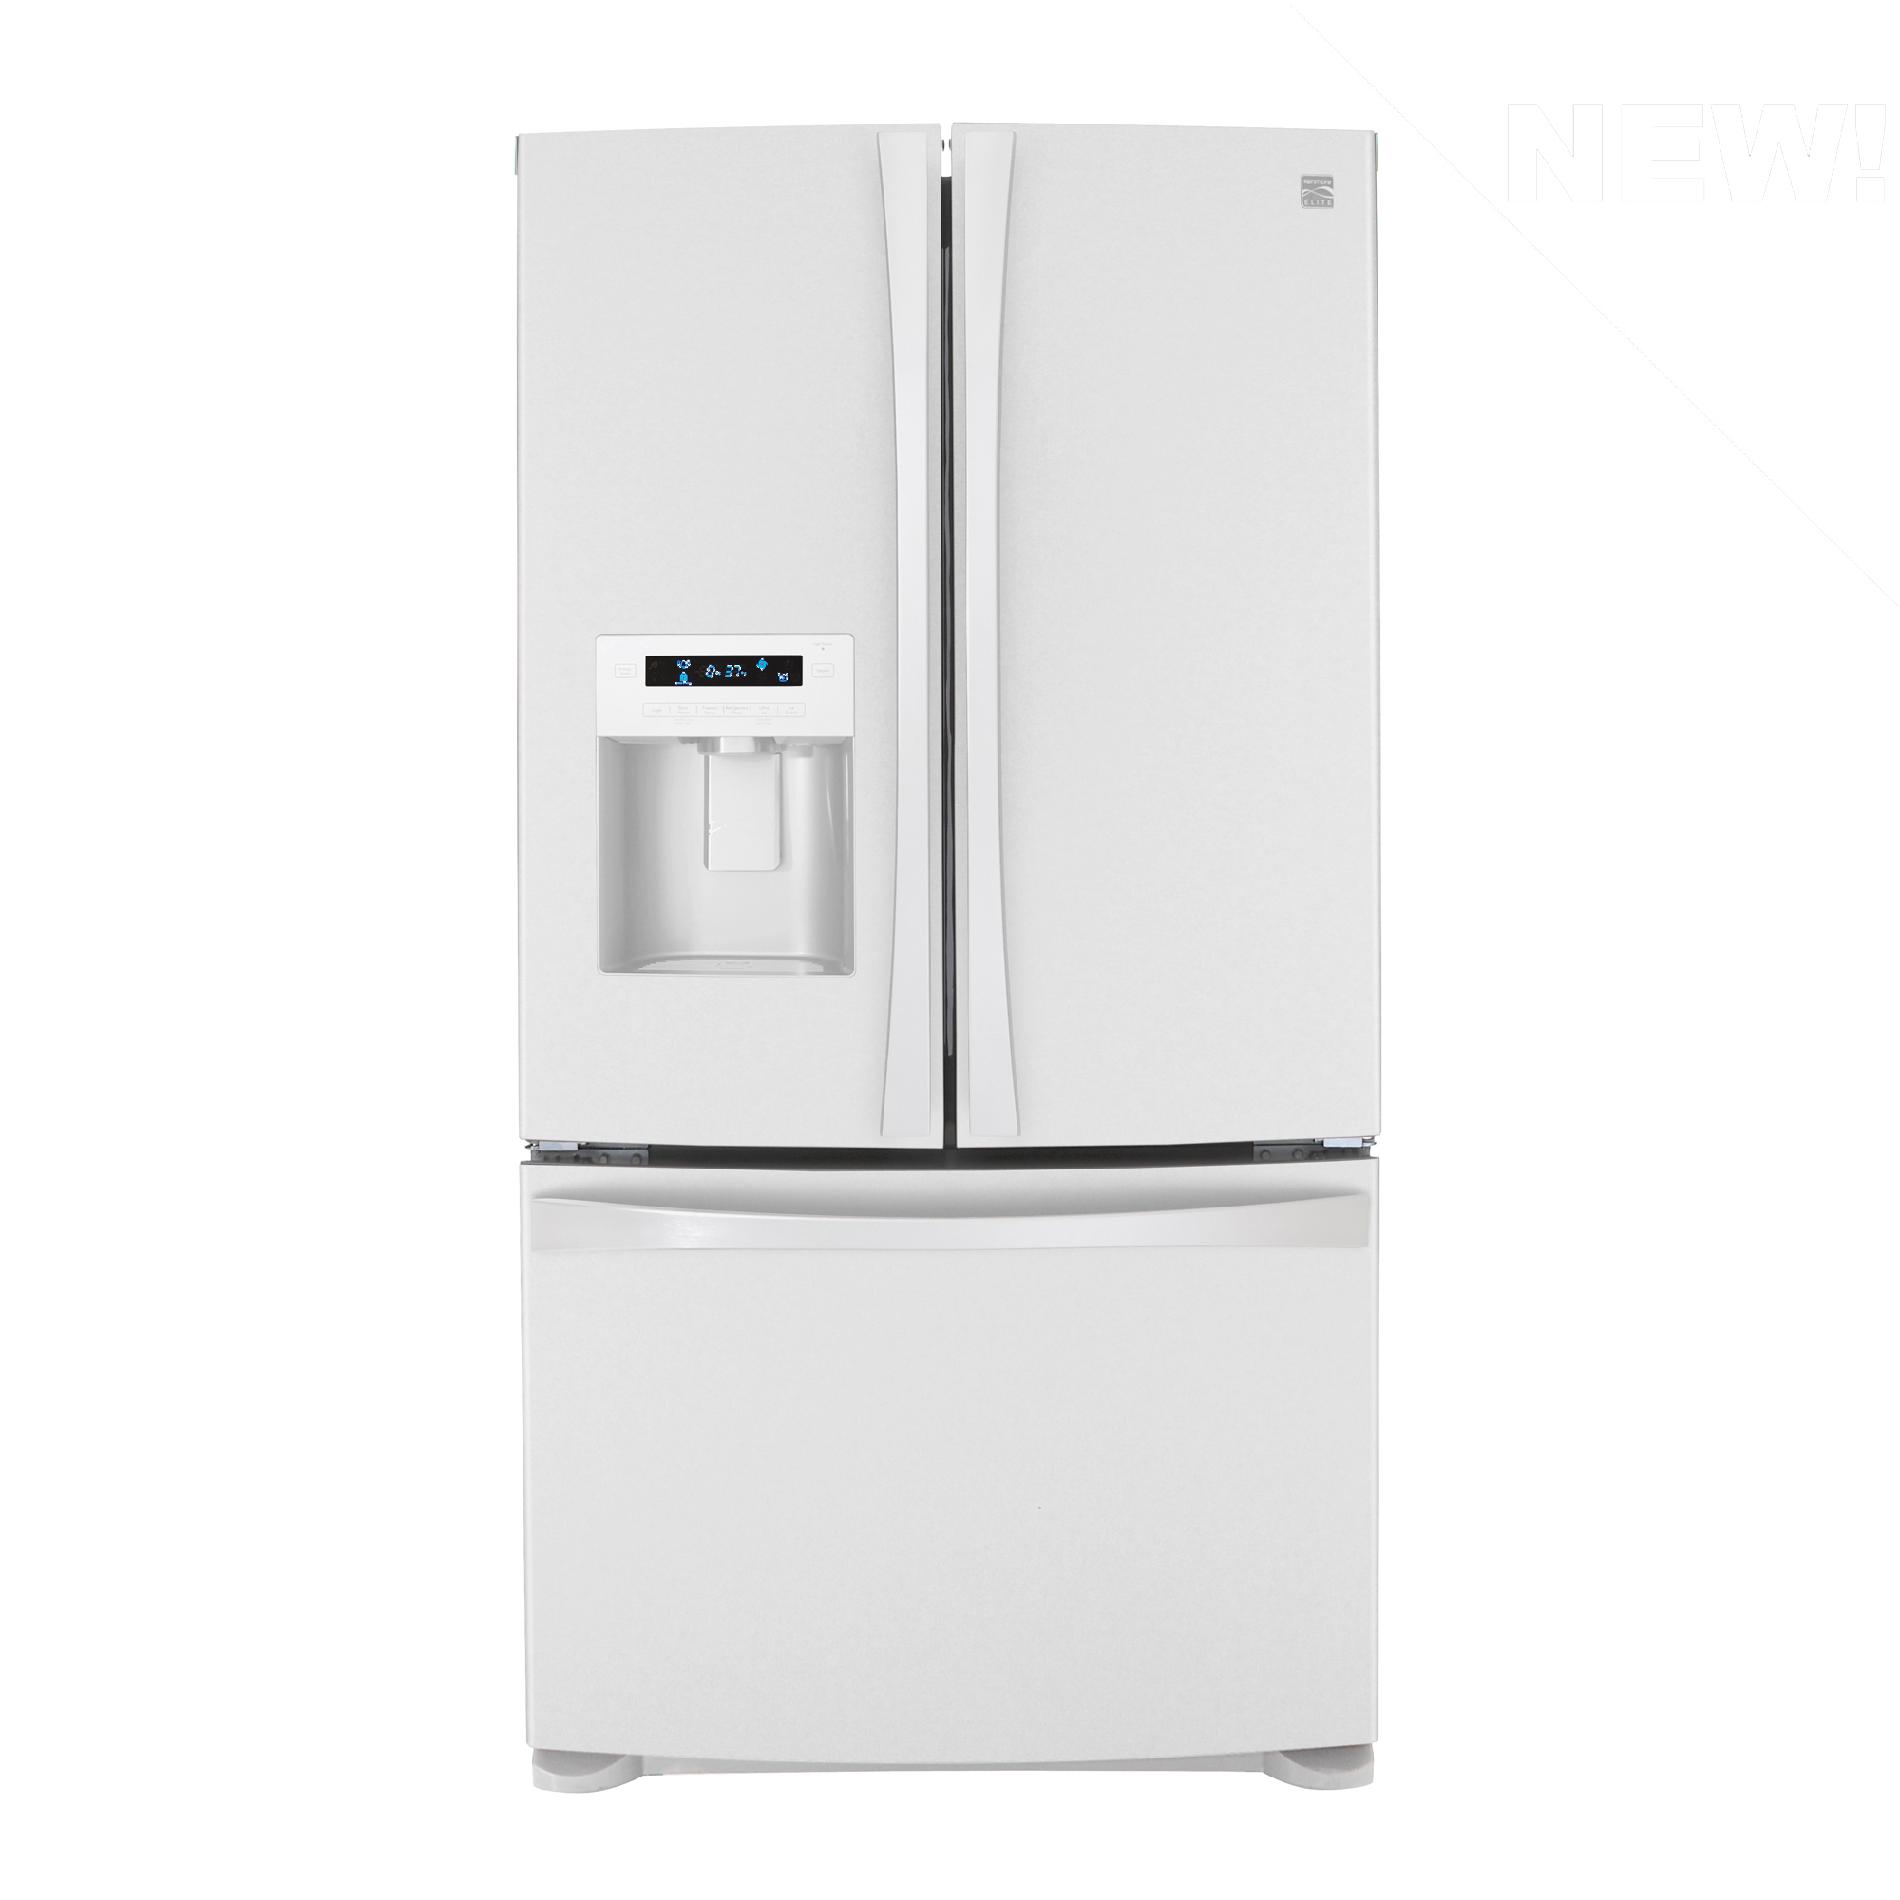 Kenmore Elite 27.6 cu. ft. French Door Bottom-Freezer Refrigerator - White